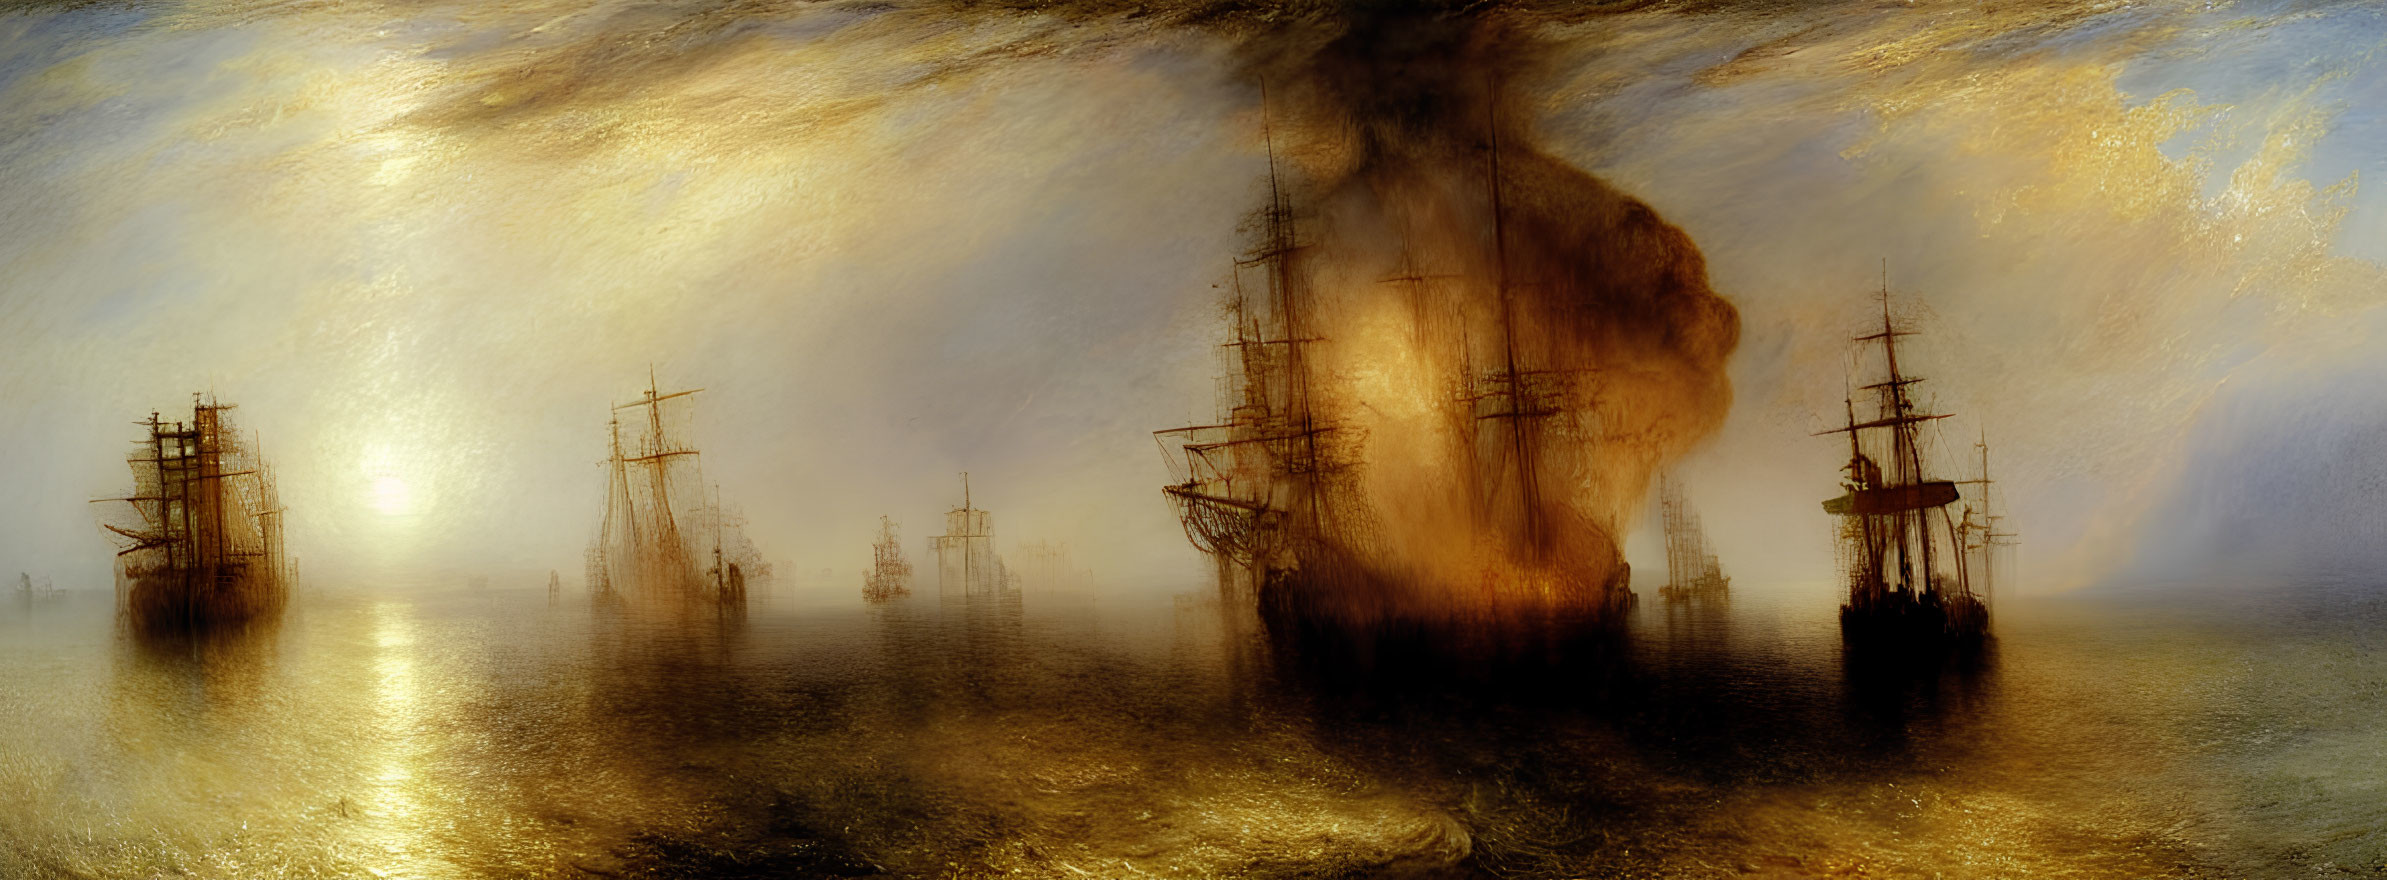 Tall ships with sails ablaze on misty golden sea